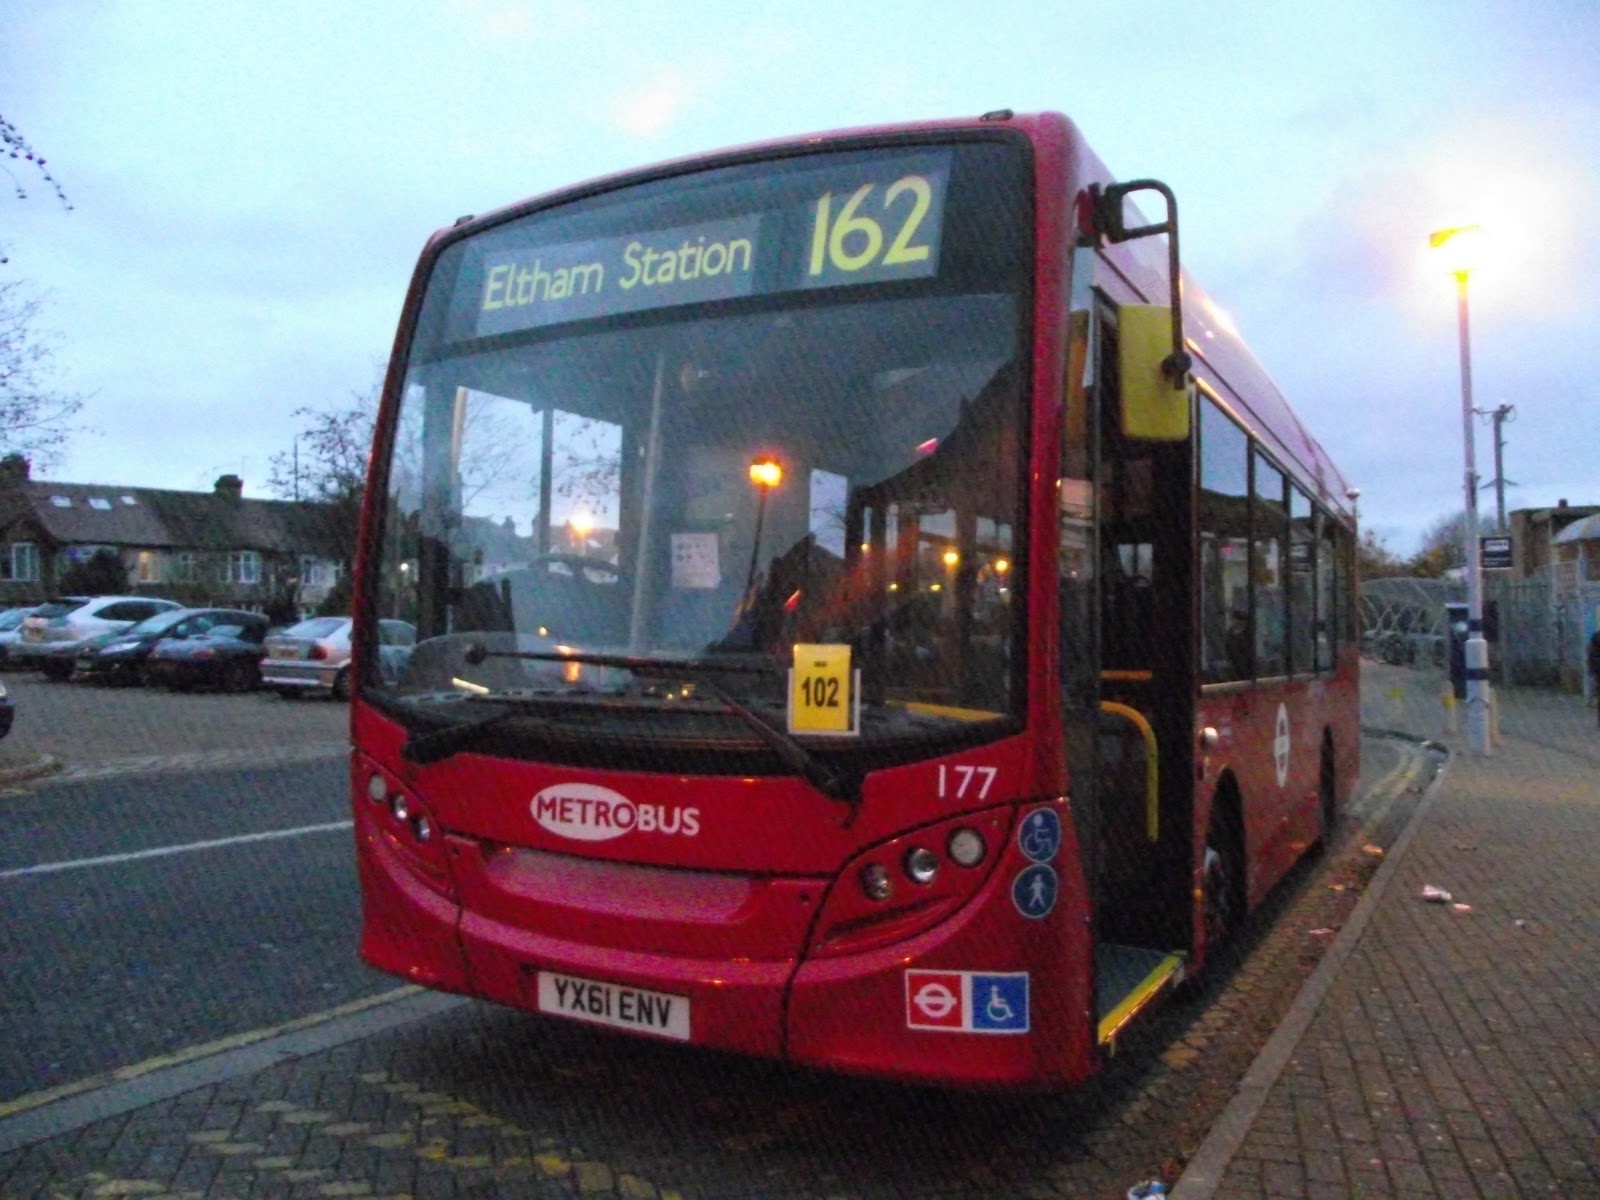 tom london & surrey bus blog: strange turns on route 162